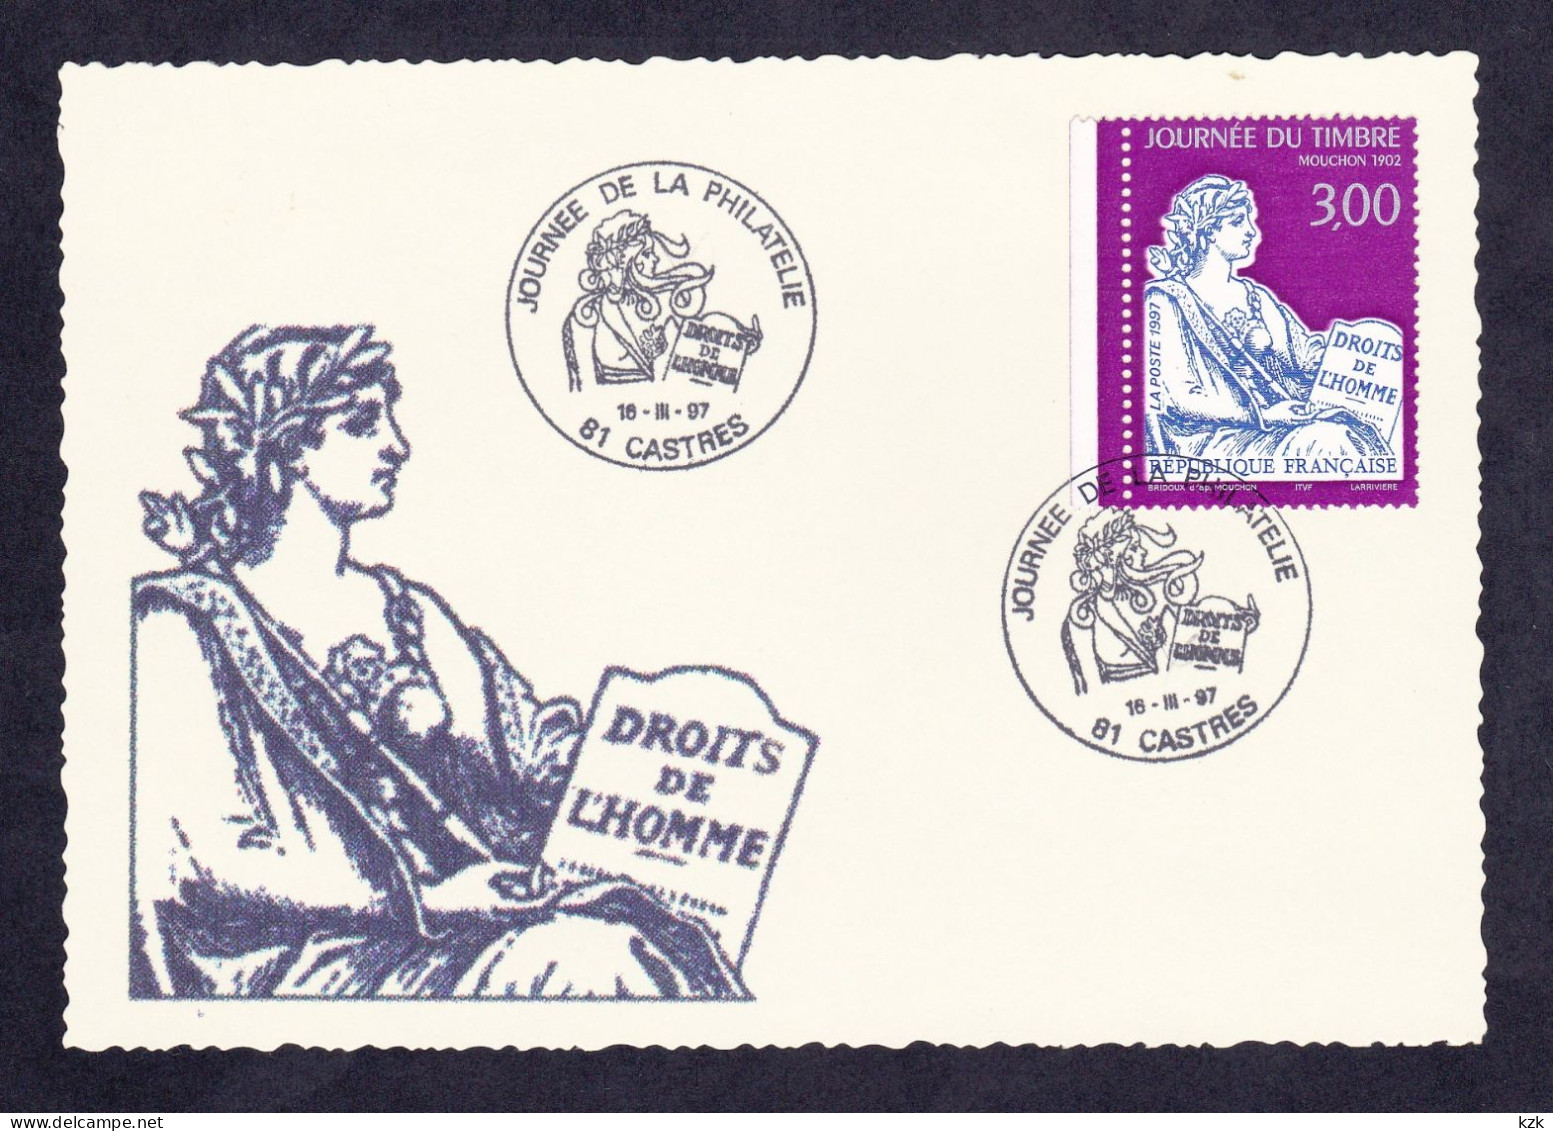 2 09	9701	-	Fête De La Philatélie - Castres 16/03/1997 - Dag Van De Postzegel